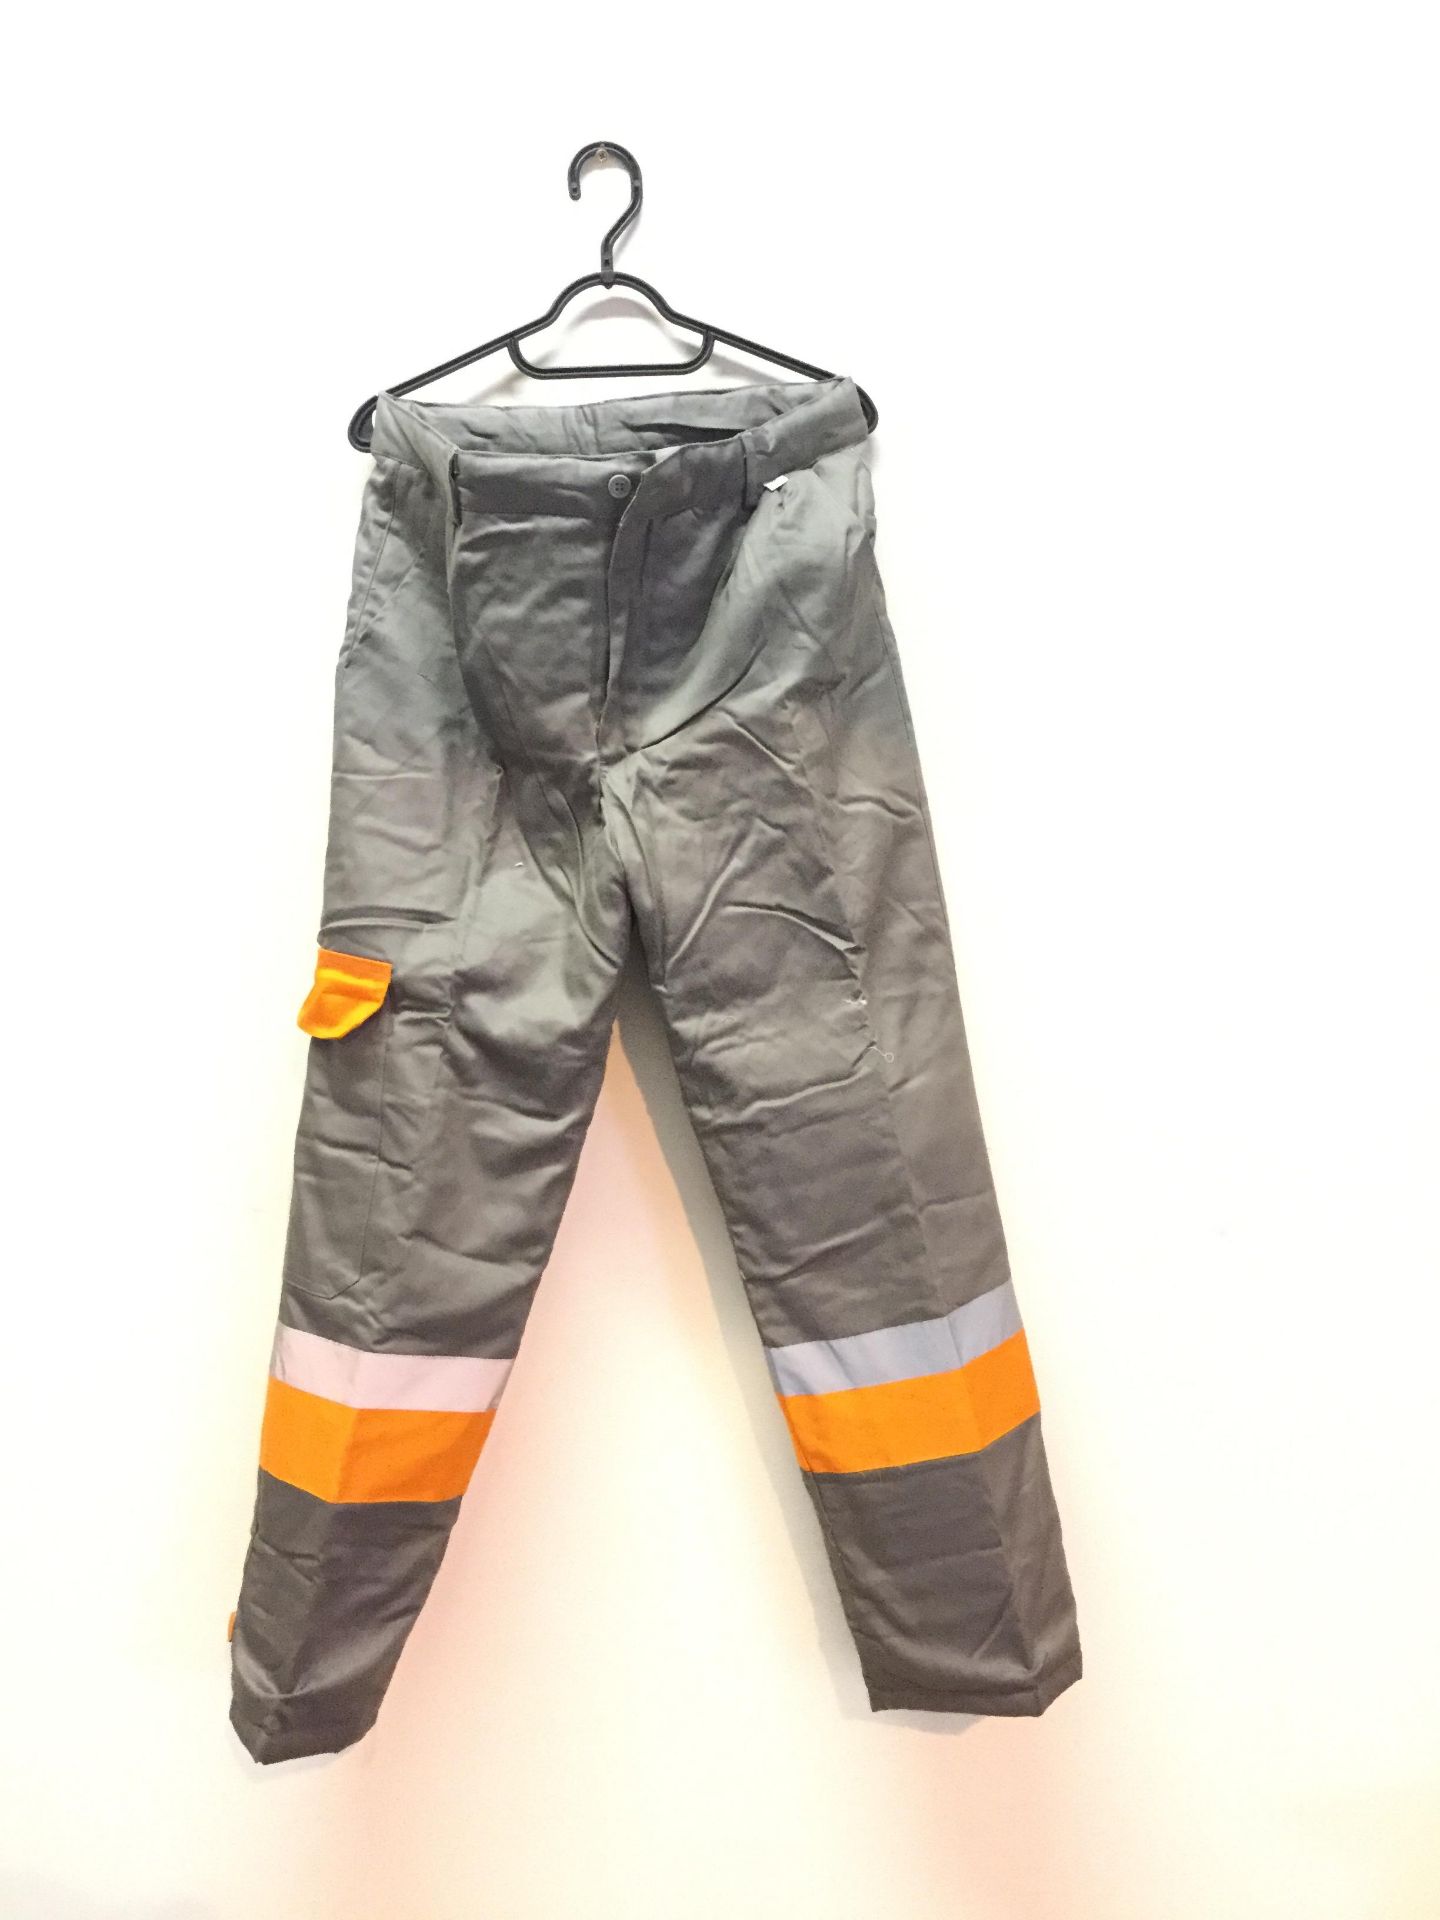 Flame Retardant Winter Trousers - Size 48